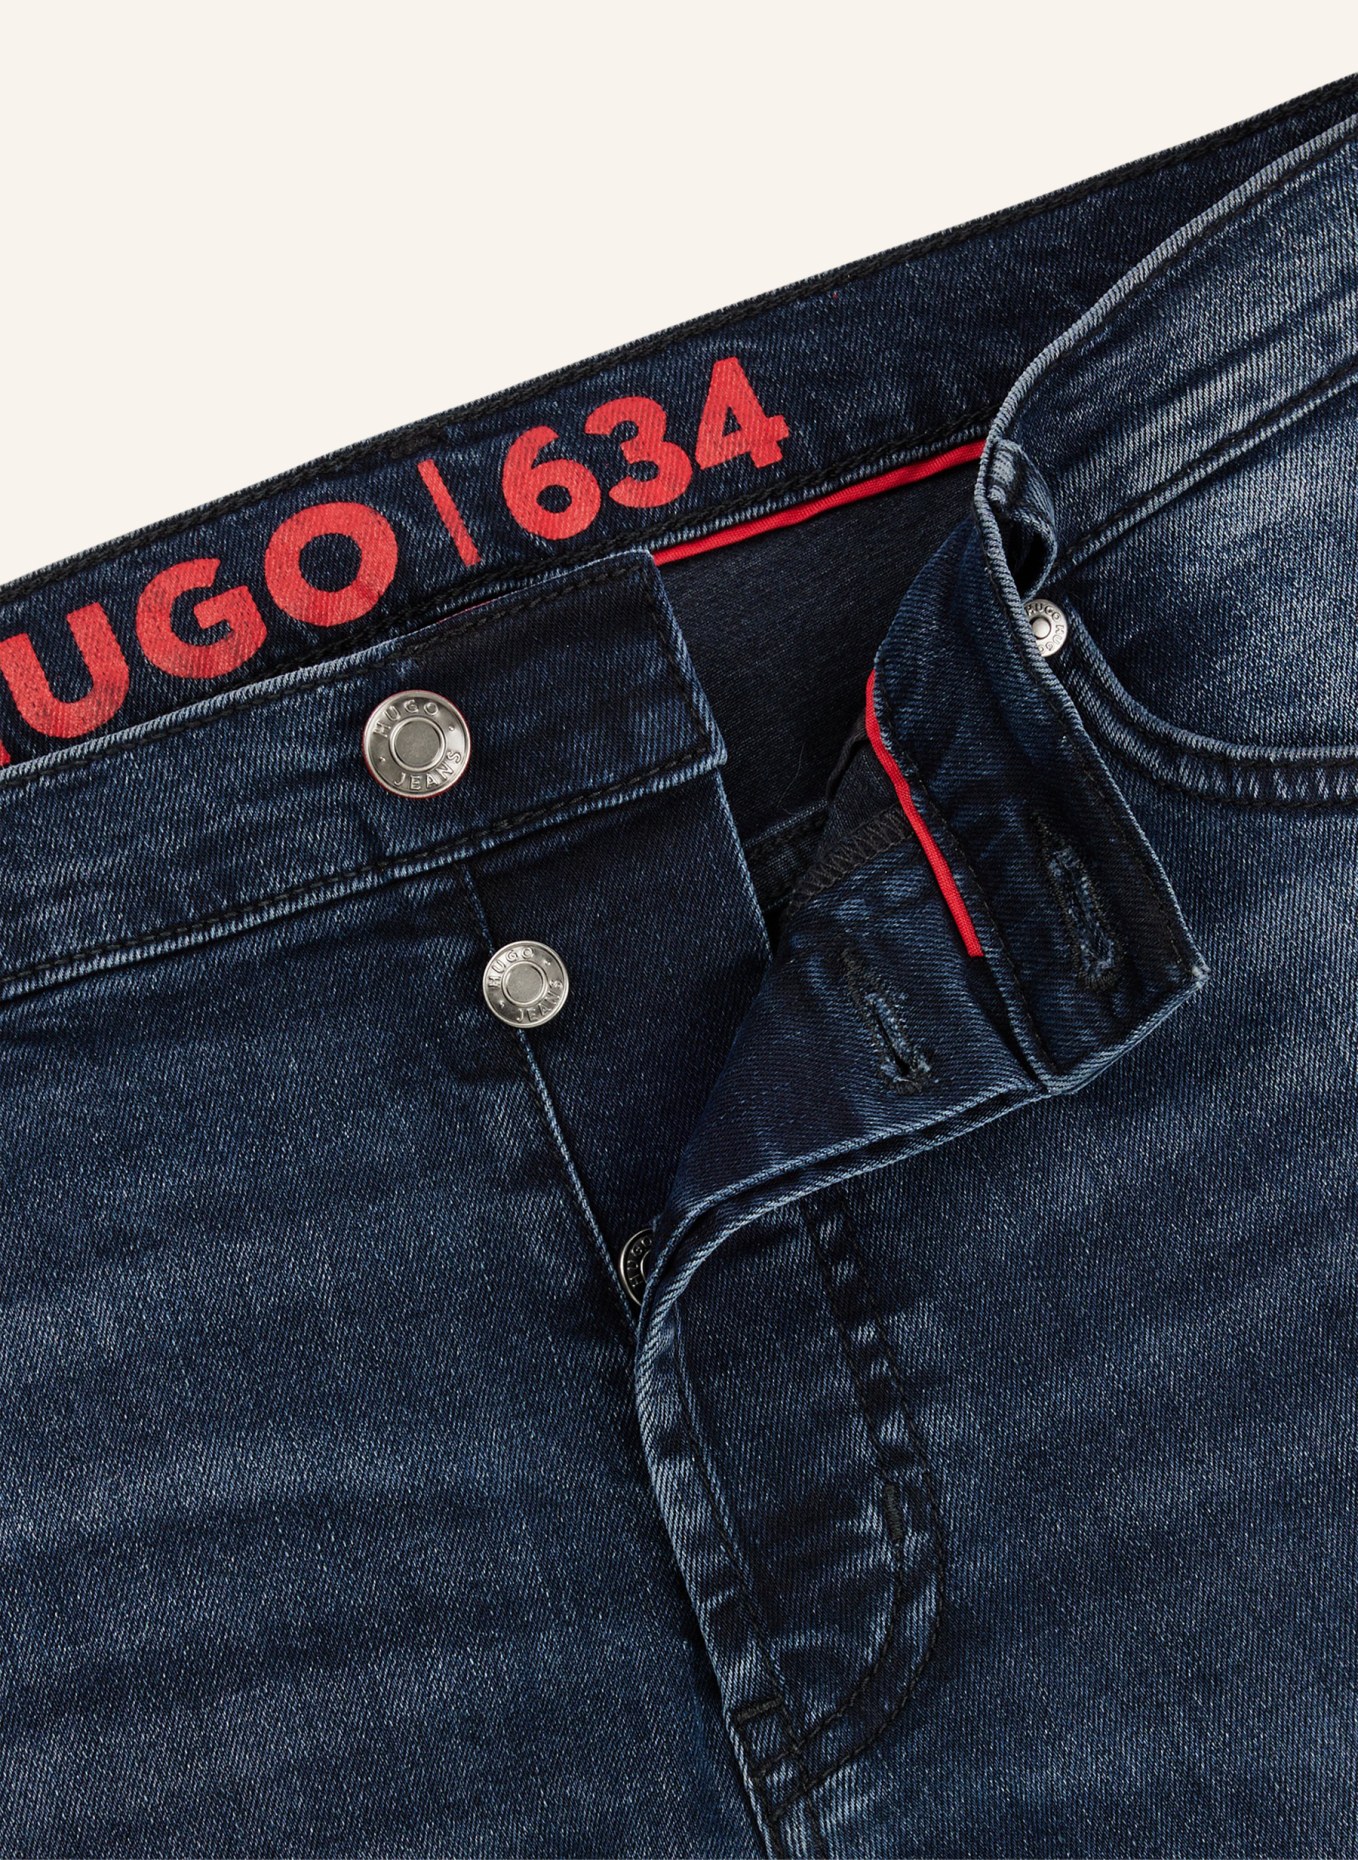 HUGO Jeans HUGO 634 Tapered Fit, Farbe: BLAU (Bild 2)